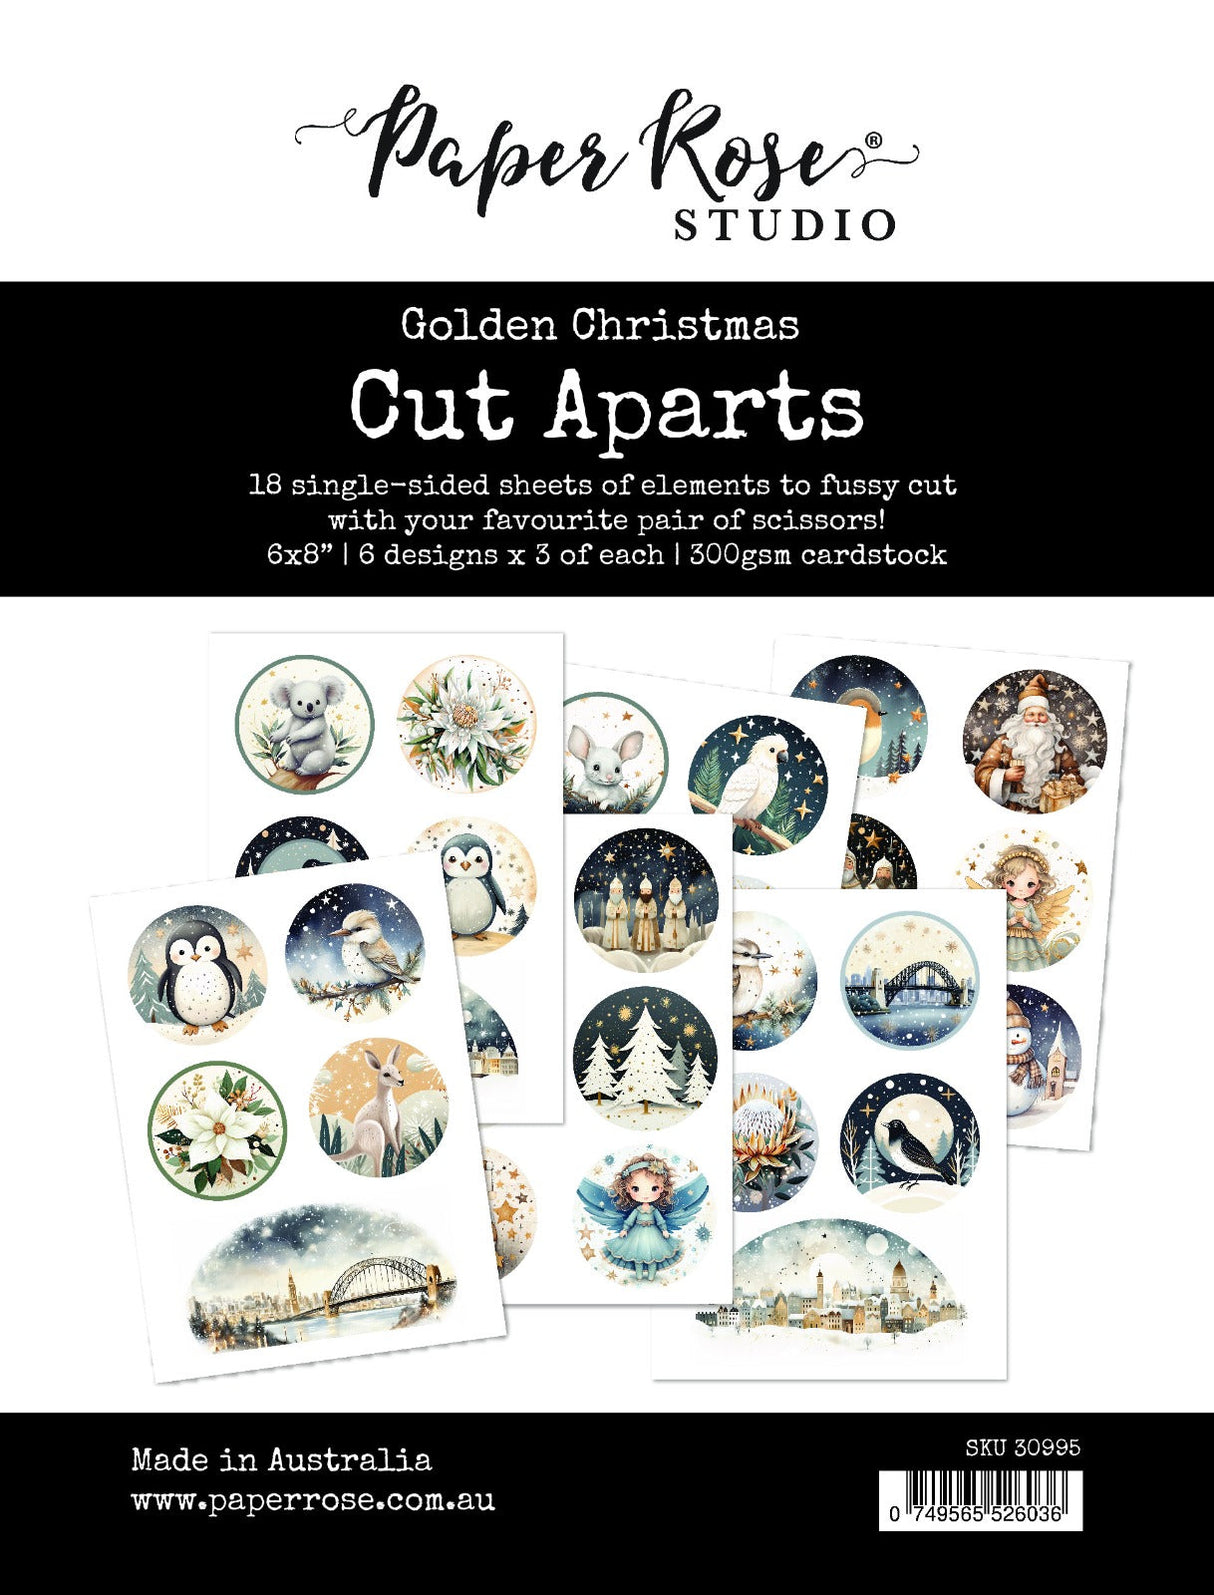 Golden Christmas Cut Aparts Paper Pack 30995 - Paper Rose Studio